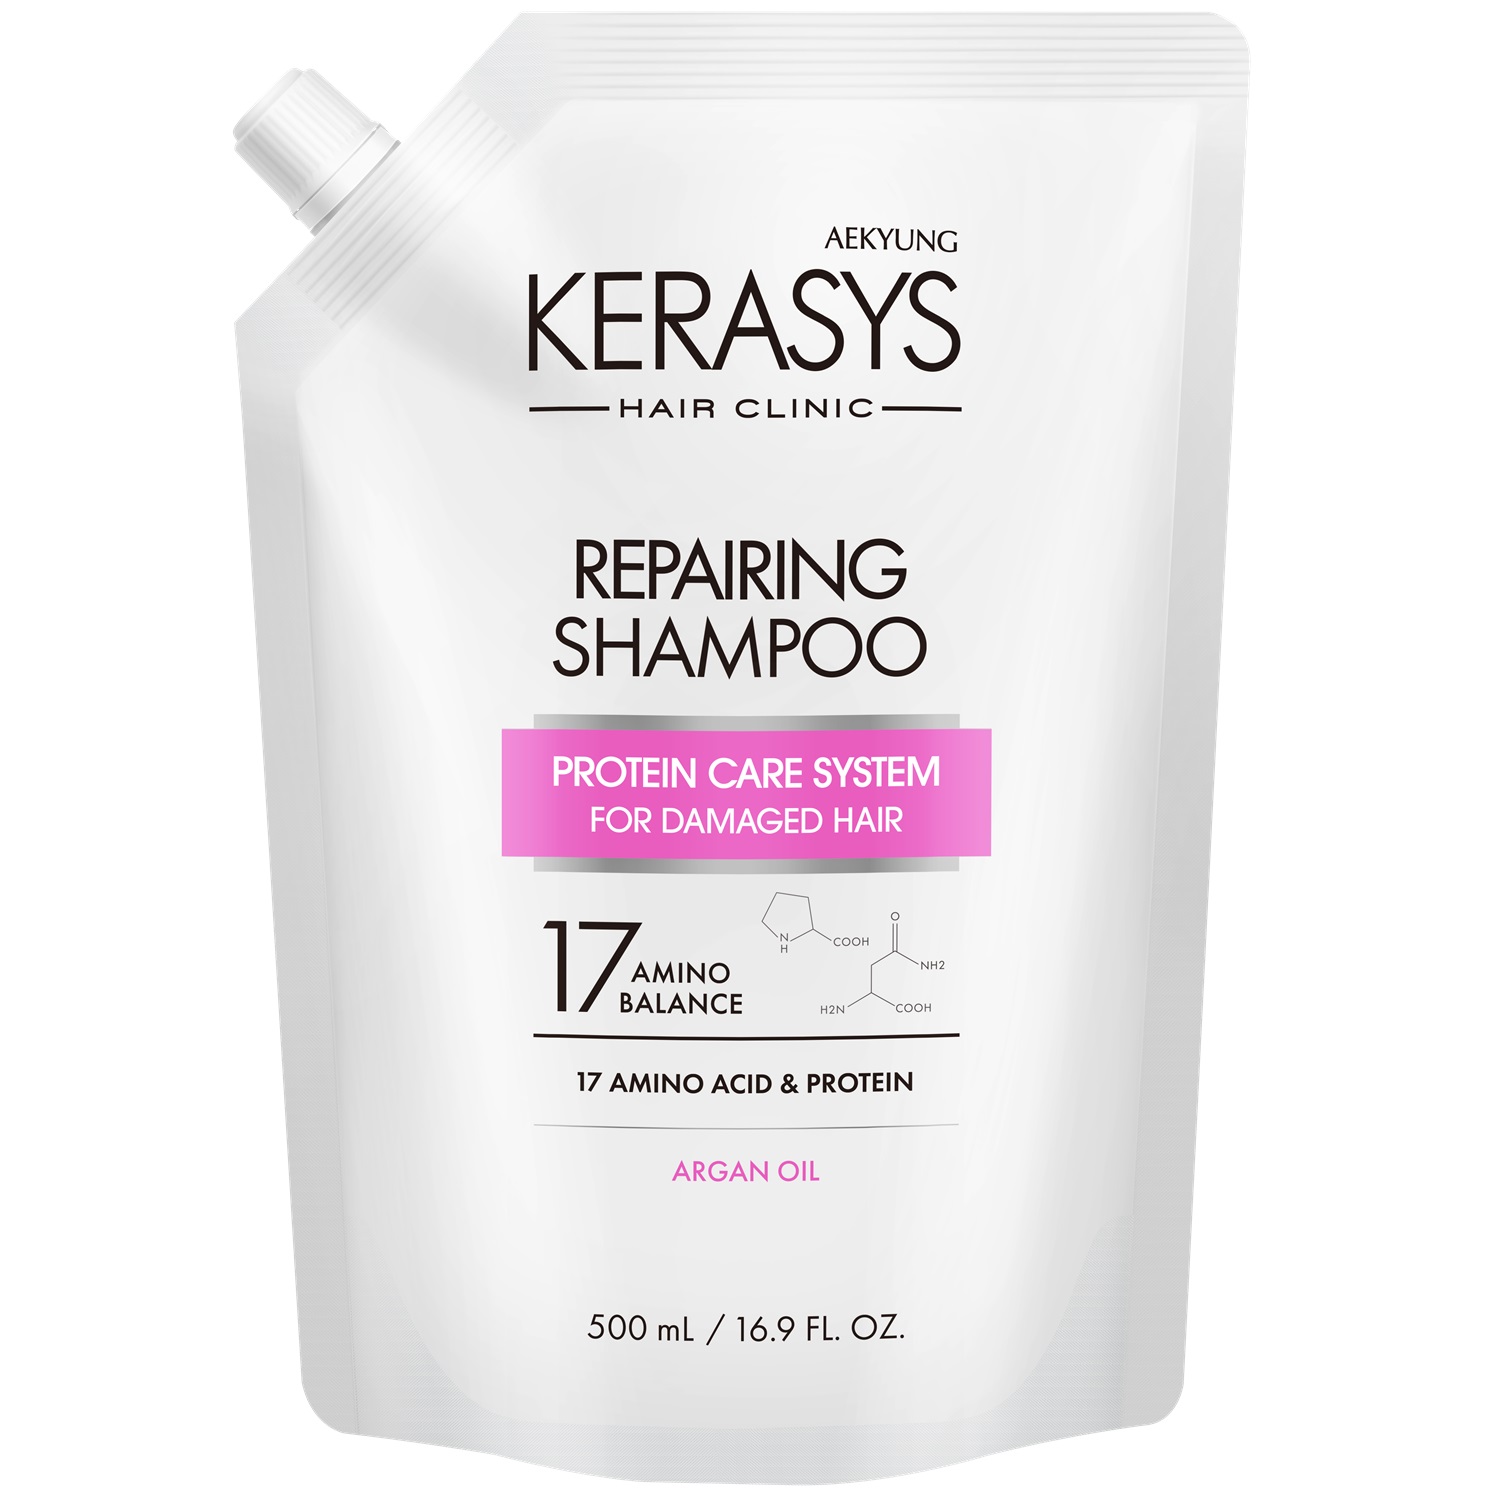 Kerasys Шампунь для волос восстанавливающий, запасной блок 500 мл (Kerasys, Hair Clinic) шампунь kerasys романтик запасной блок 500 мл